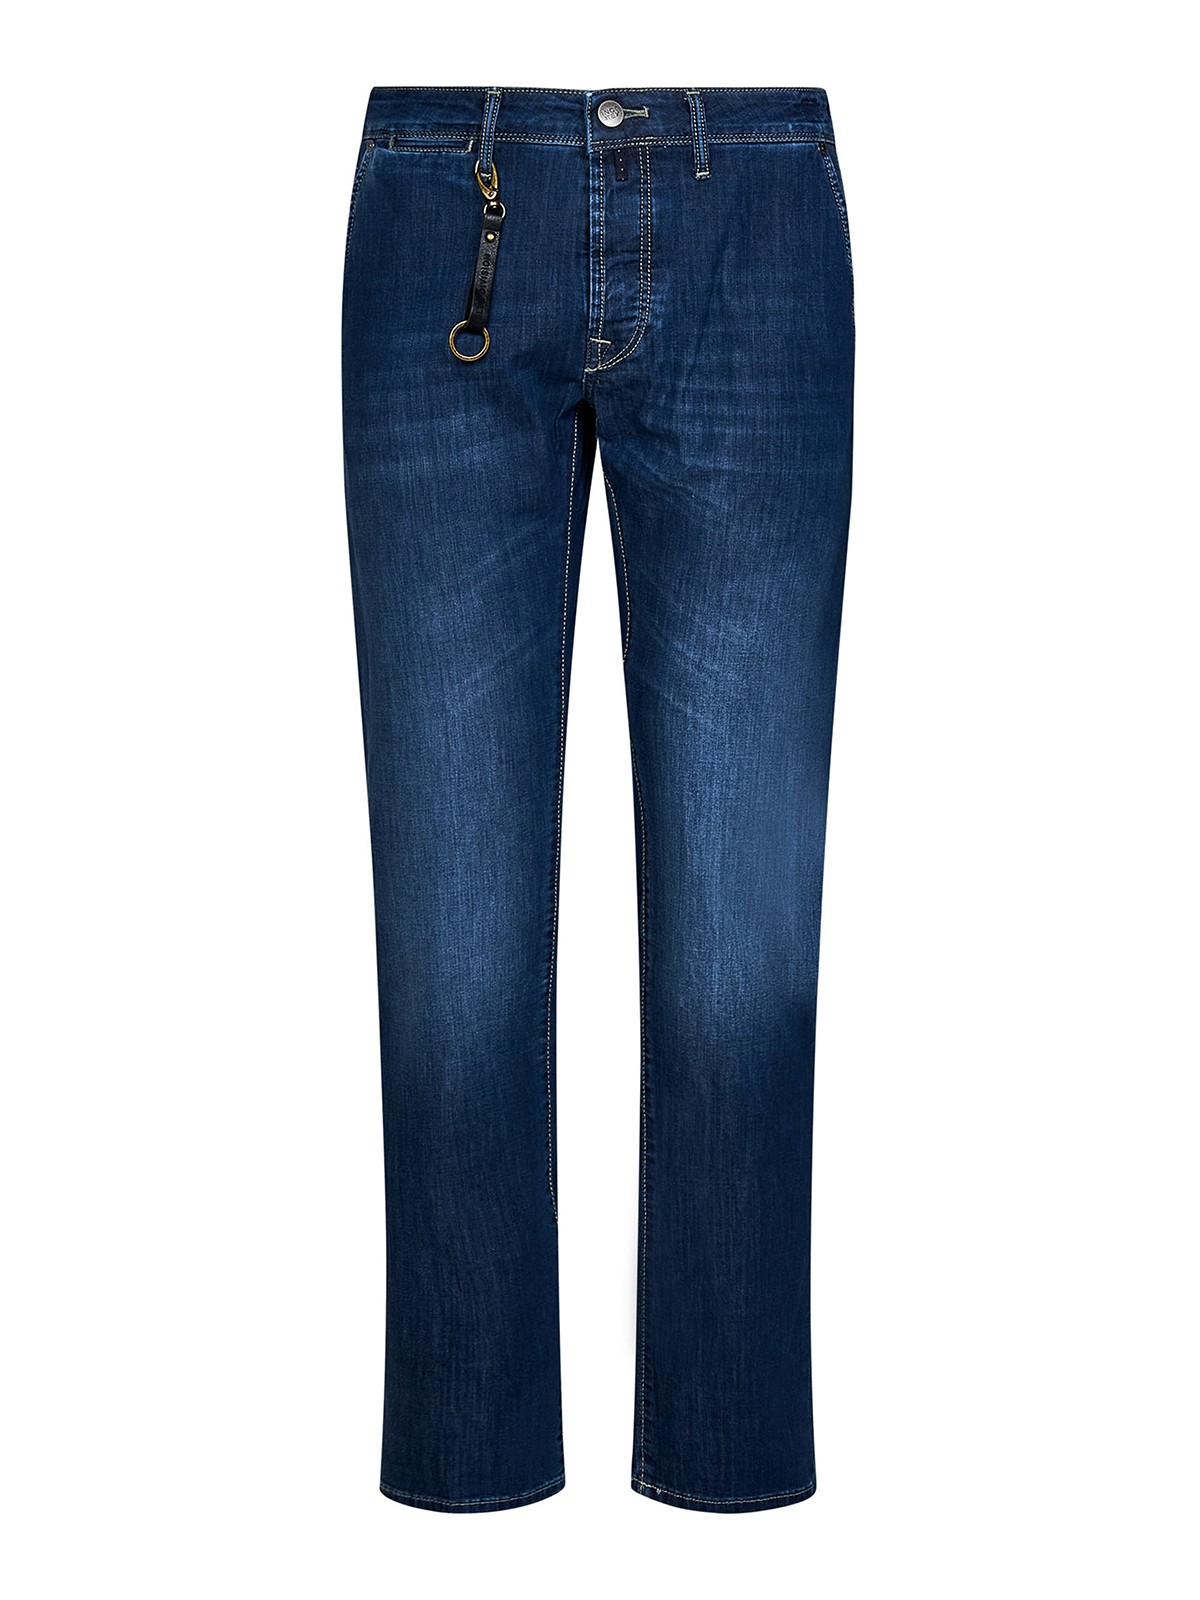 Incotex Slim Fit Jeans In Medium Blue Washed Denim